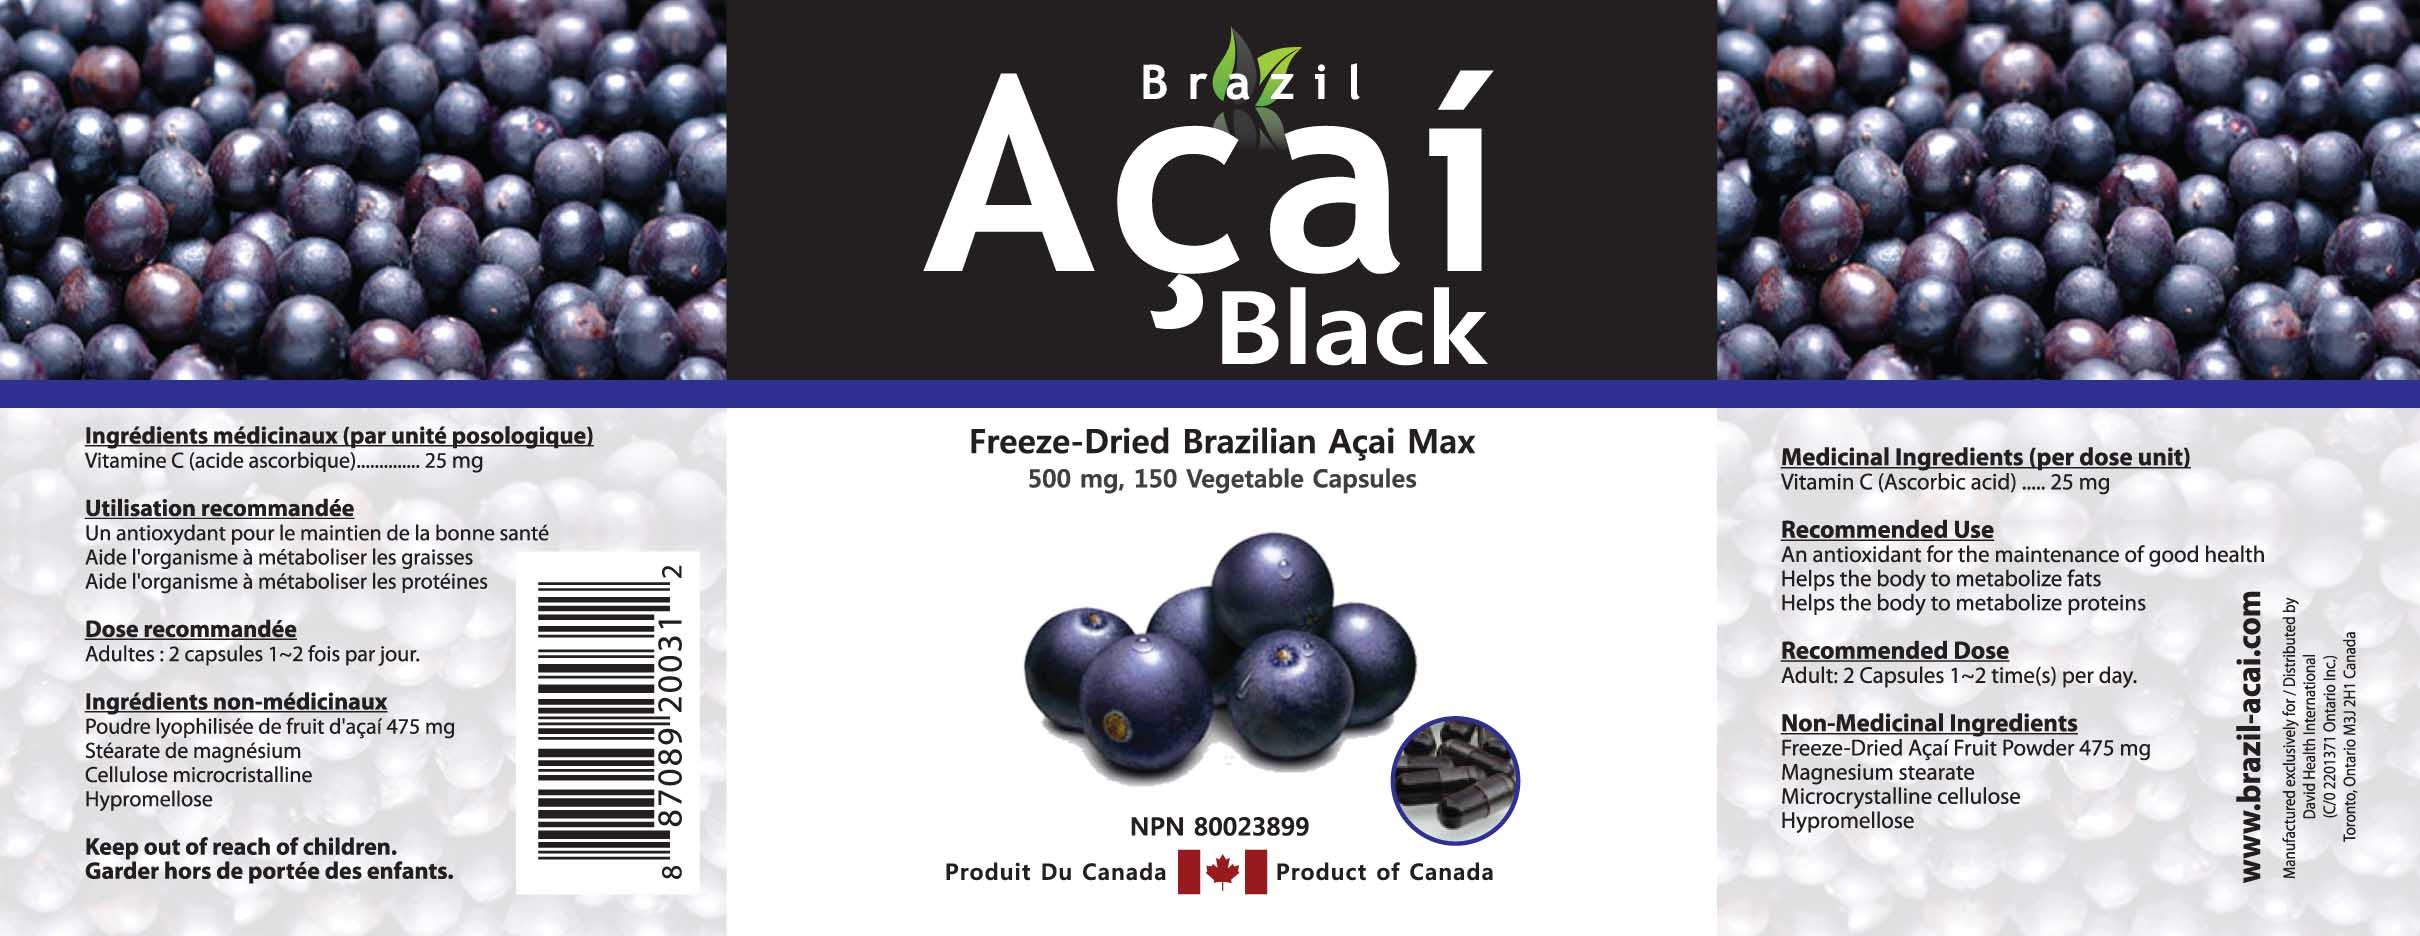 BRAZIL ACAI BLACK FREEZE-DRIED (500MG X 150CAPSULES)